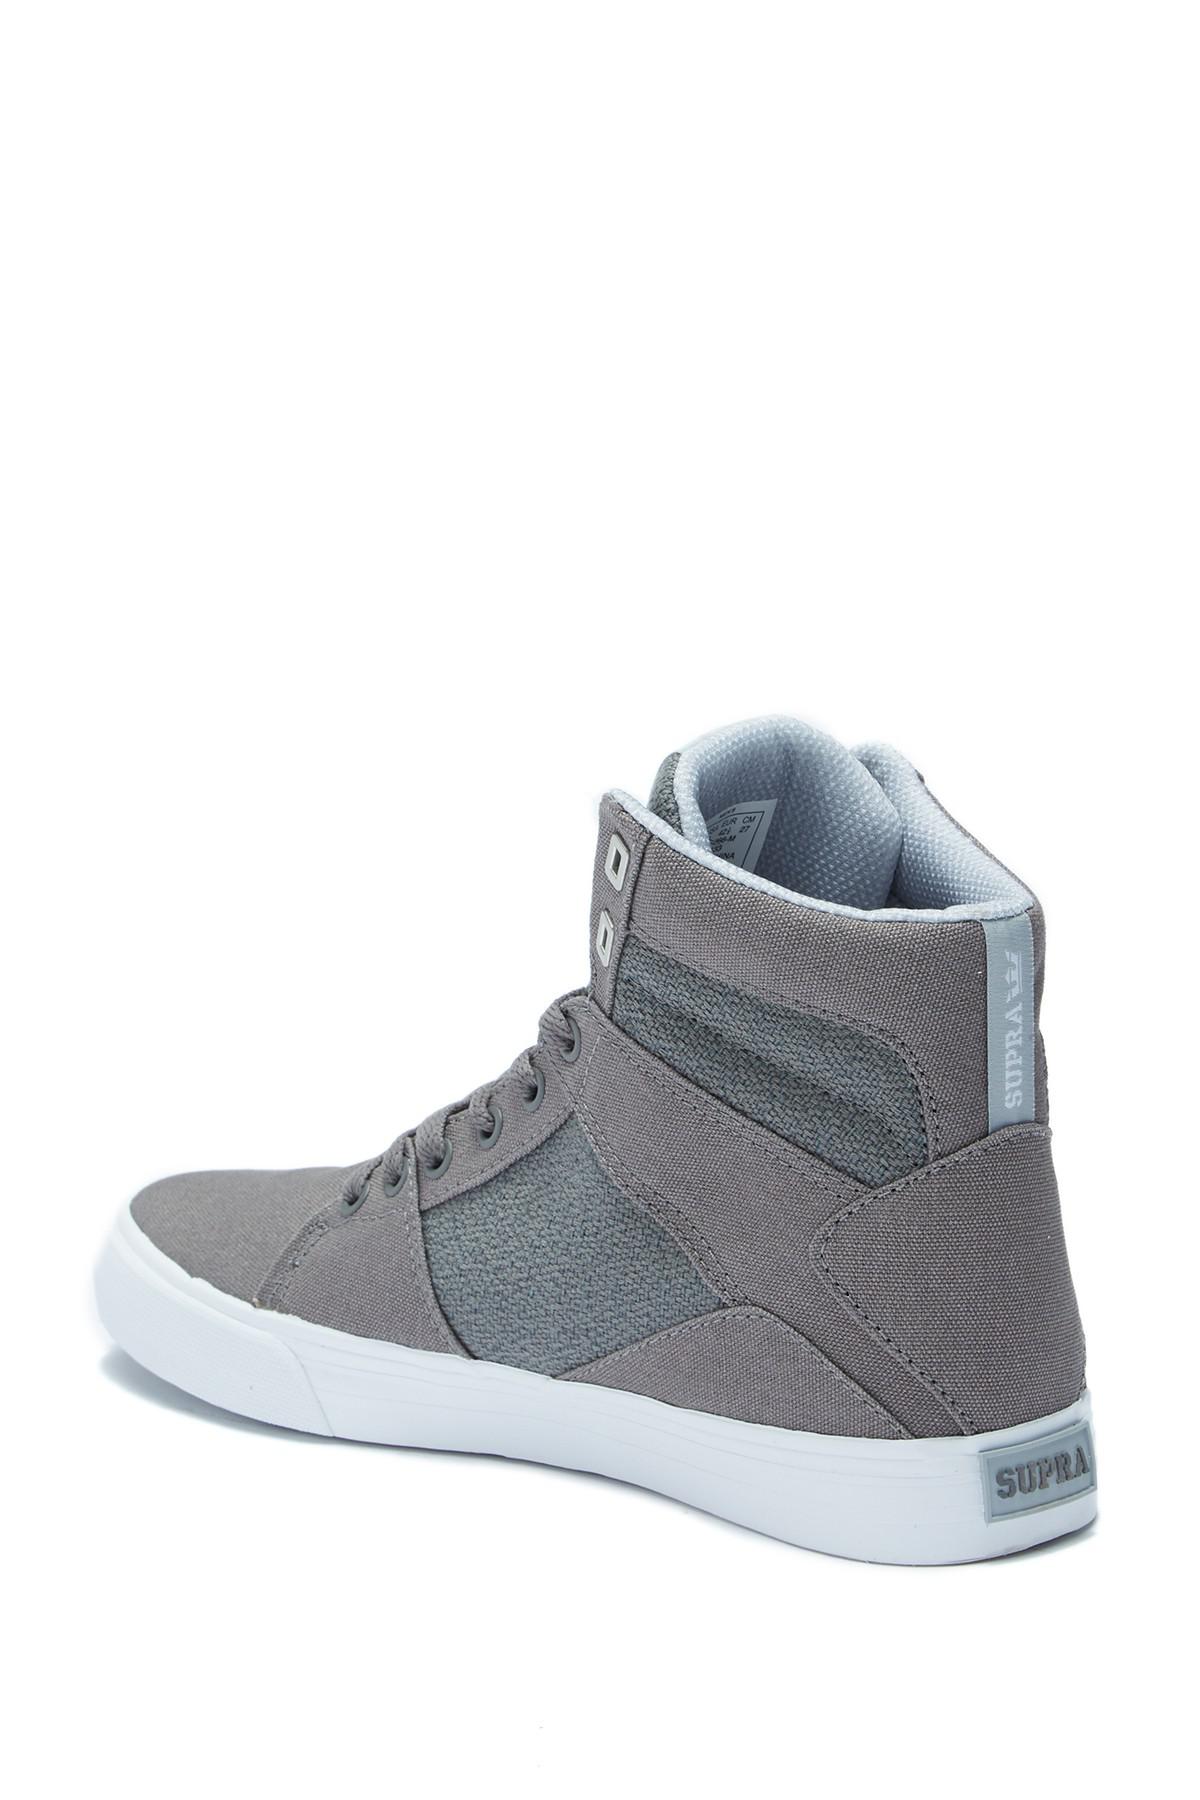 Supra Aluminum Mid Top Sneaker in Grey/lt Grey-White (Gray) for Men | Lyst